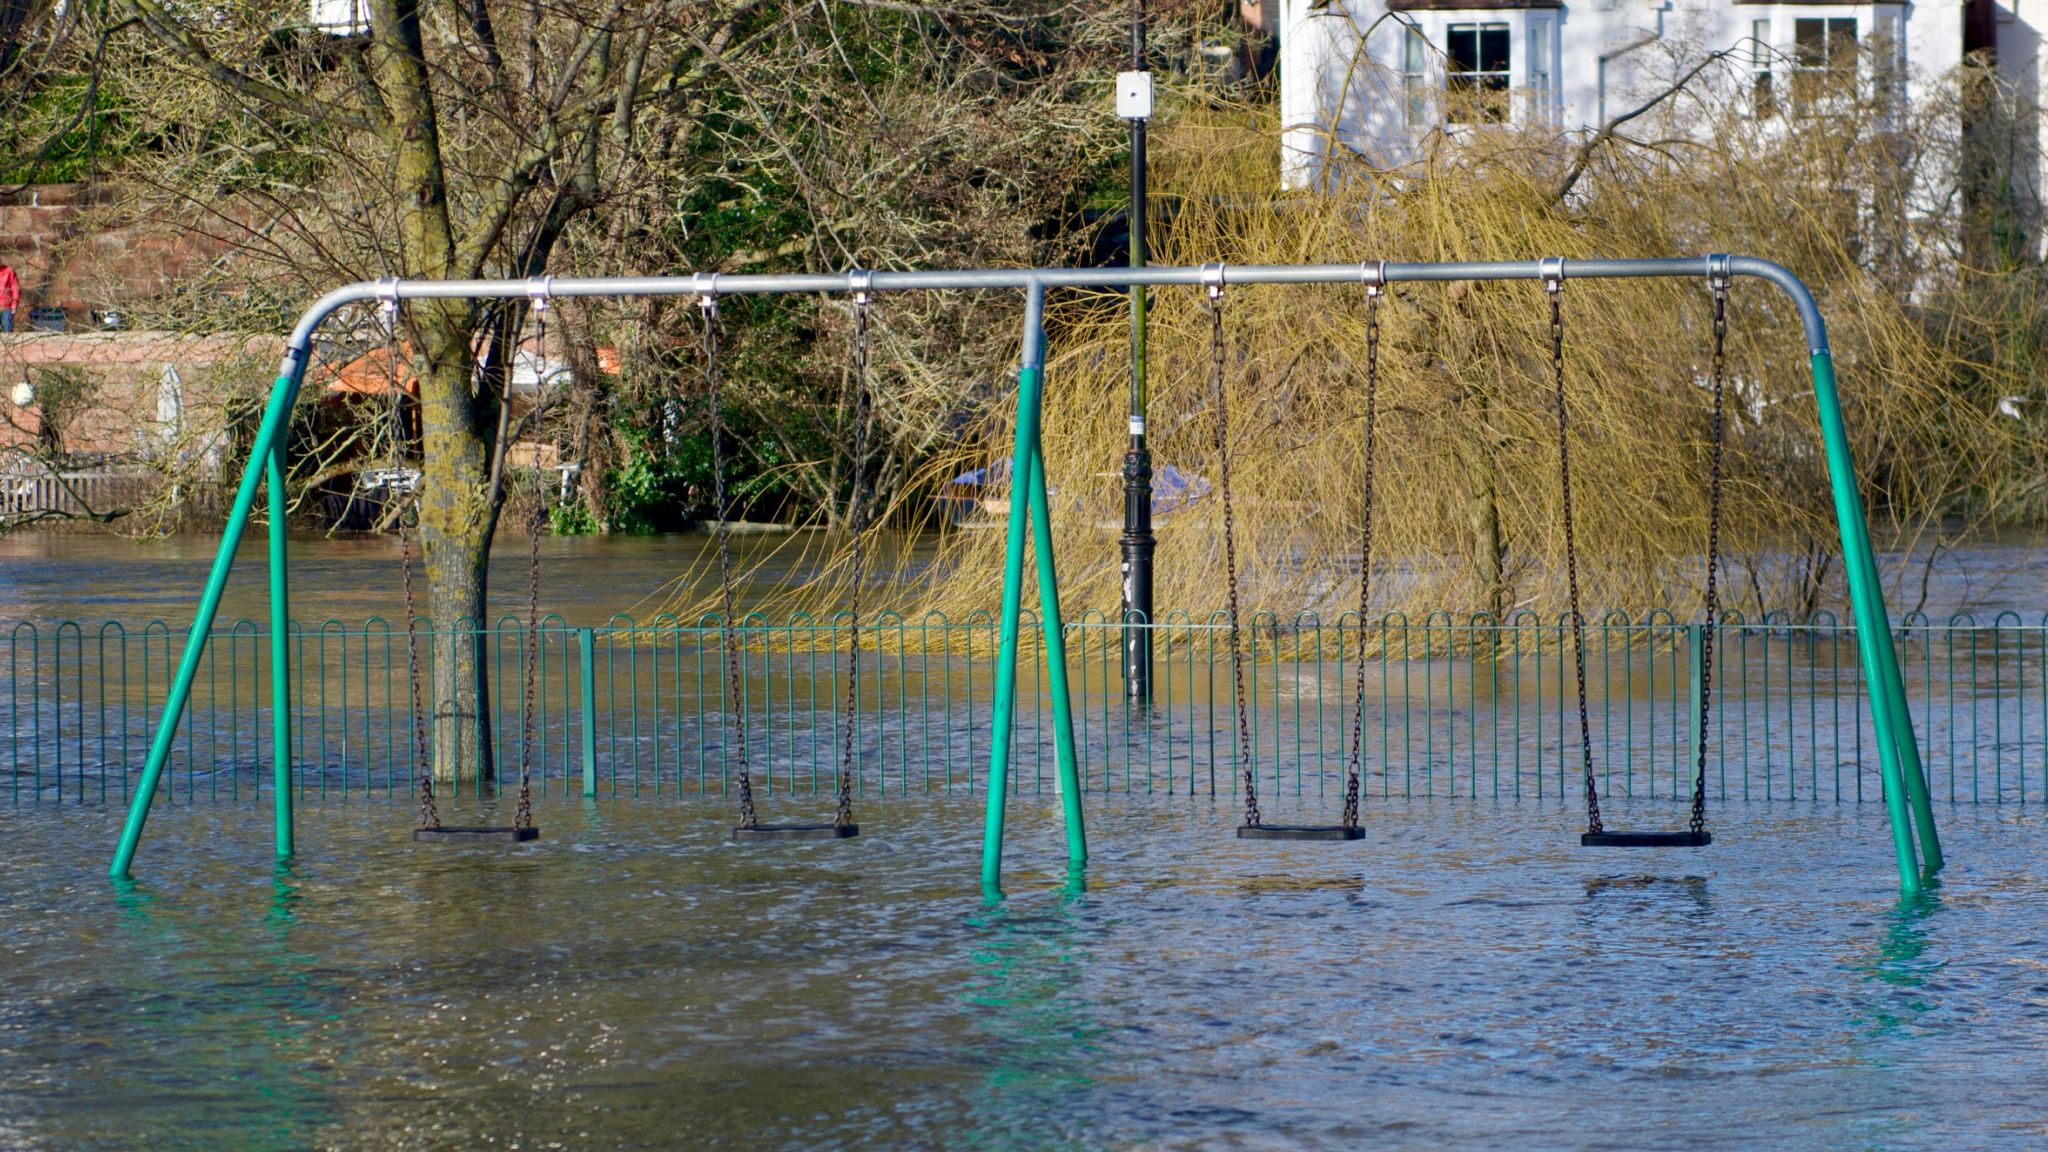 Flooding in Shrewsbury